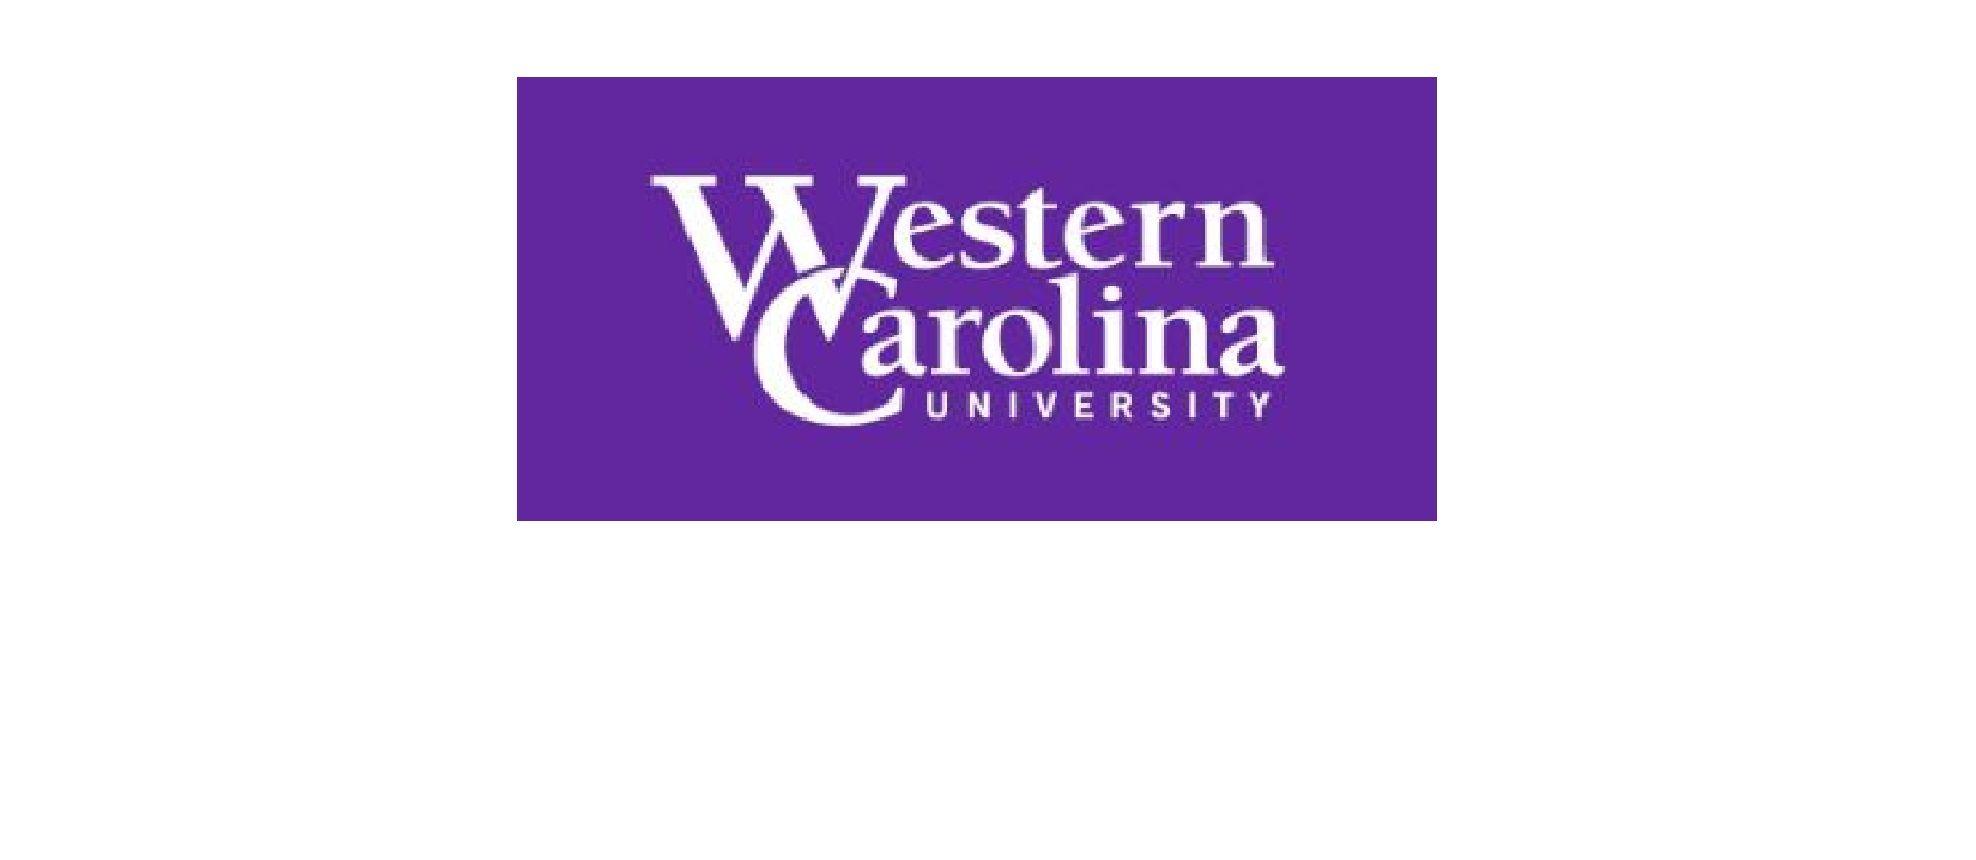 WCU Logo - Western Carolina University Retirement Planning Today